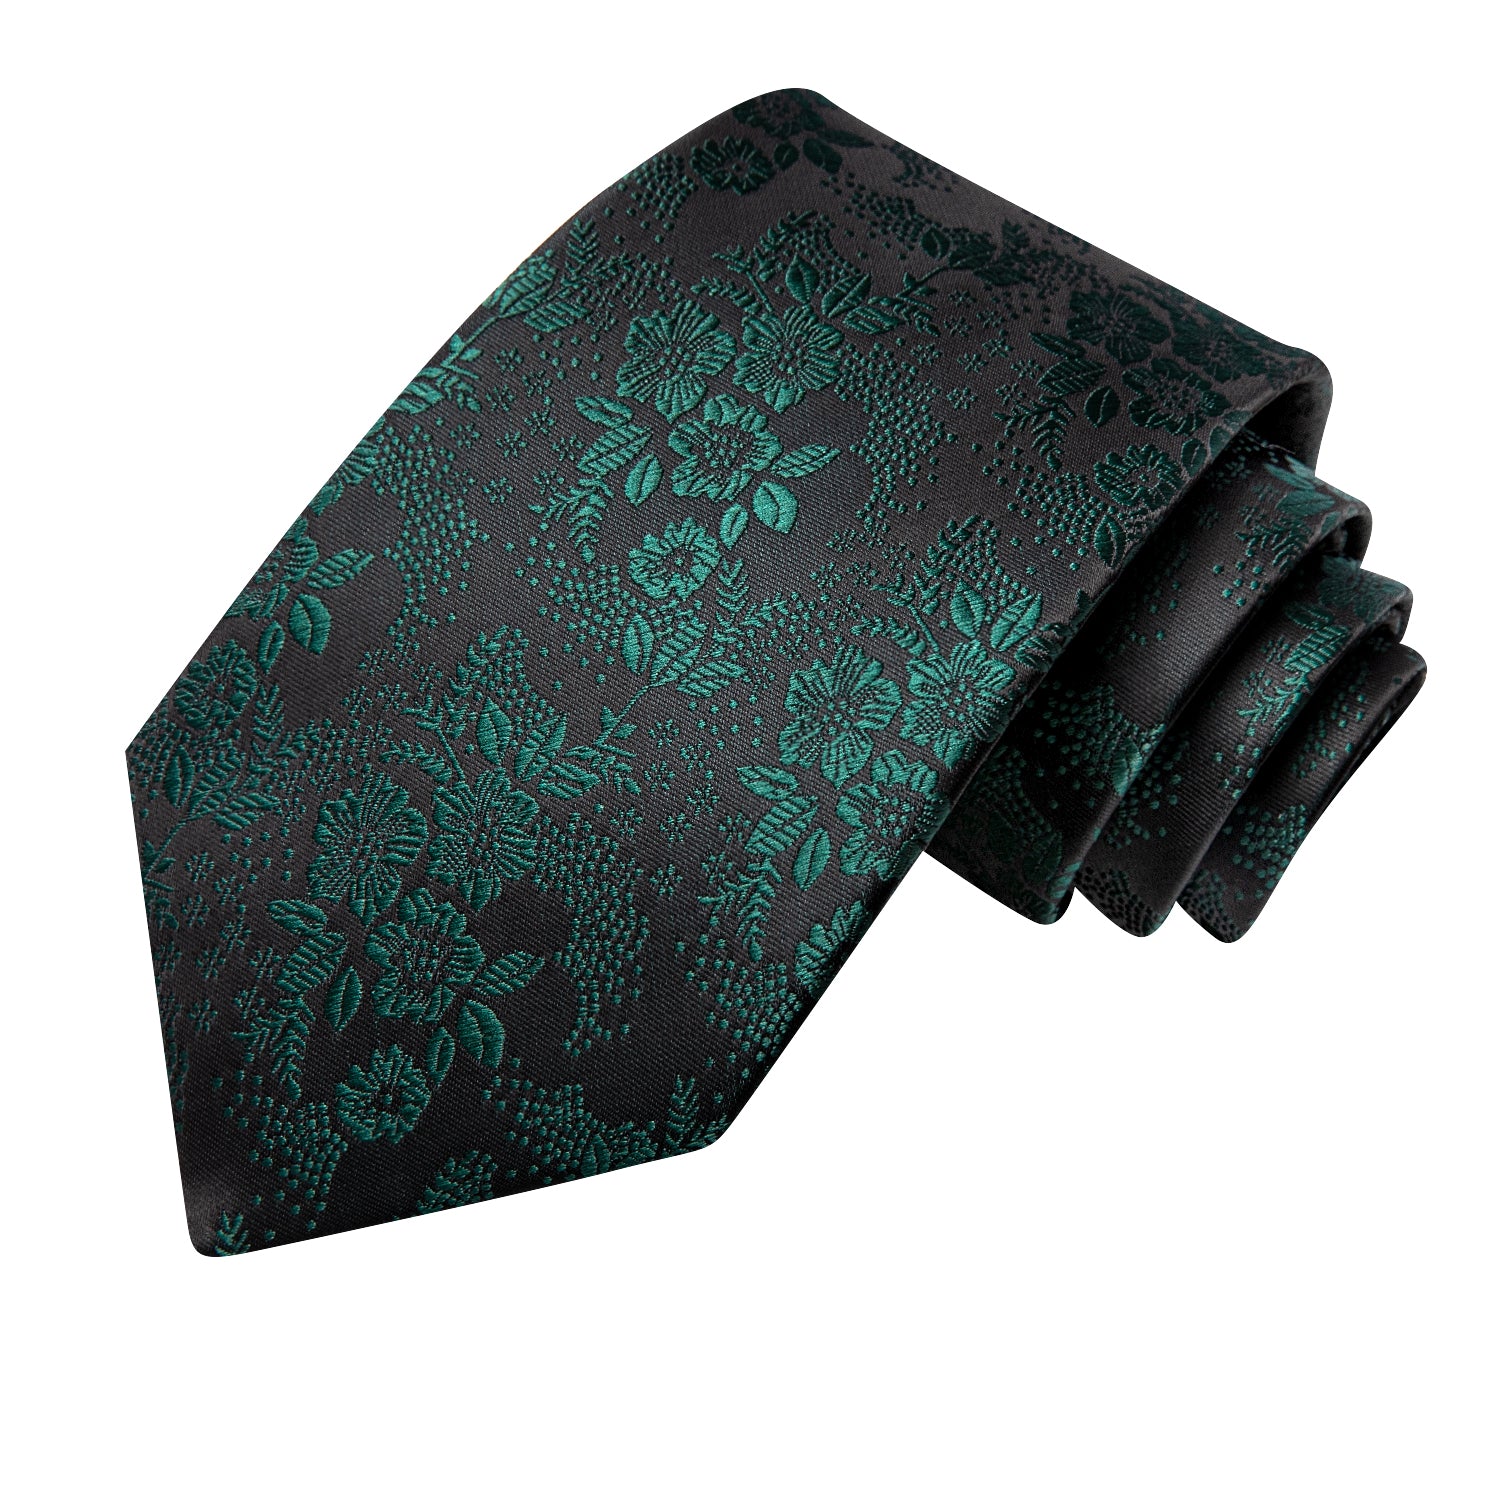 Hi-Tie Black Green Flower Men's Tie Pocket Square Cufflinks Set